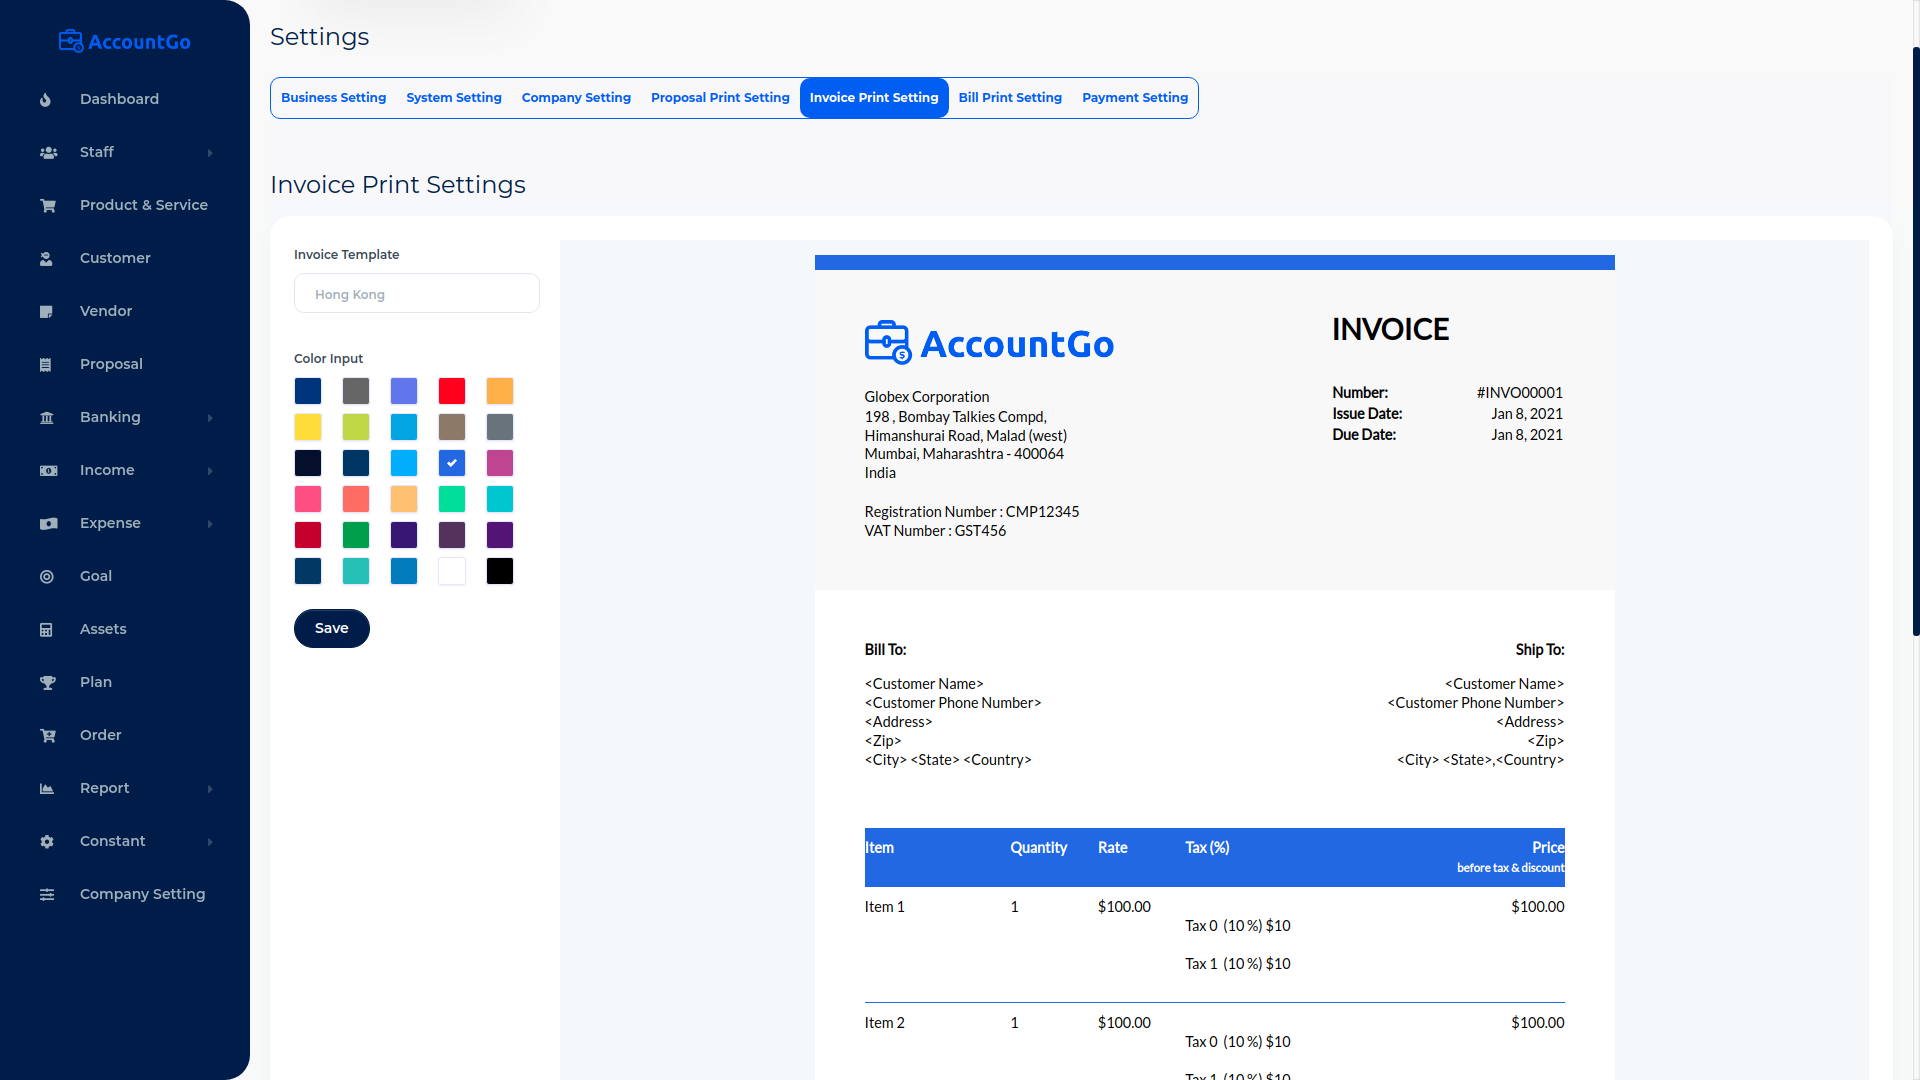 AccountGo SaaS - Accounting and Billing Tool - 17